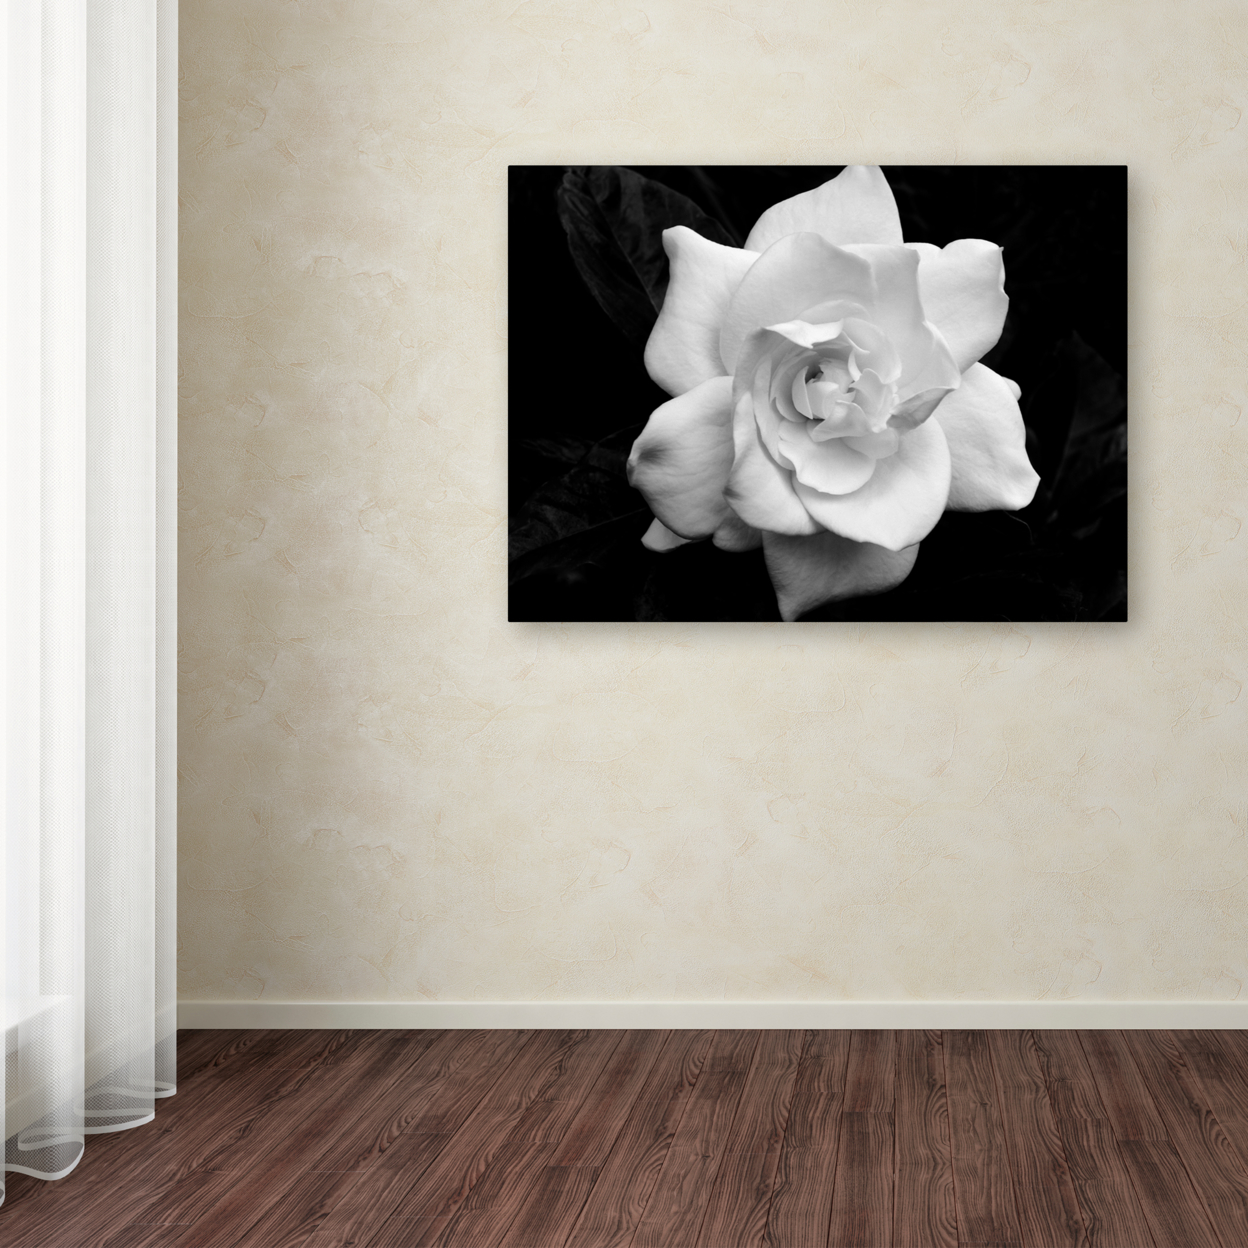 Kurt Shaffer 'Gardenia In Black And White' Canvas Wall Art 35 X 47 Inches